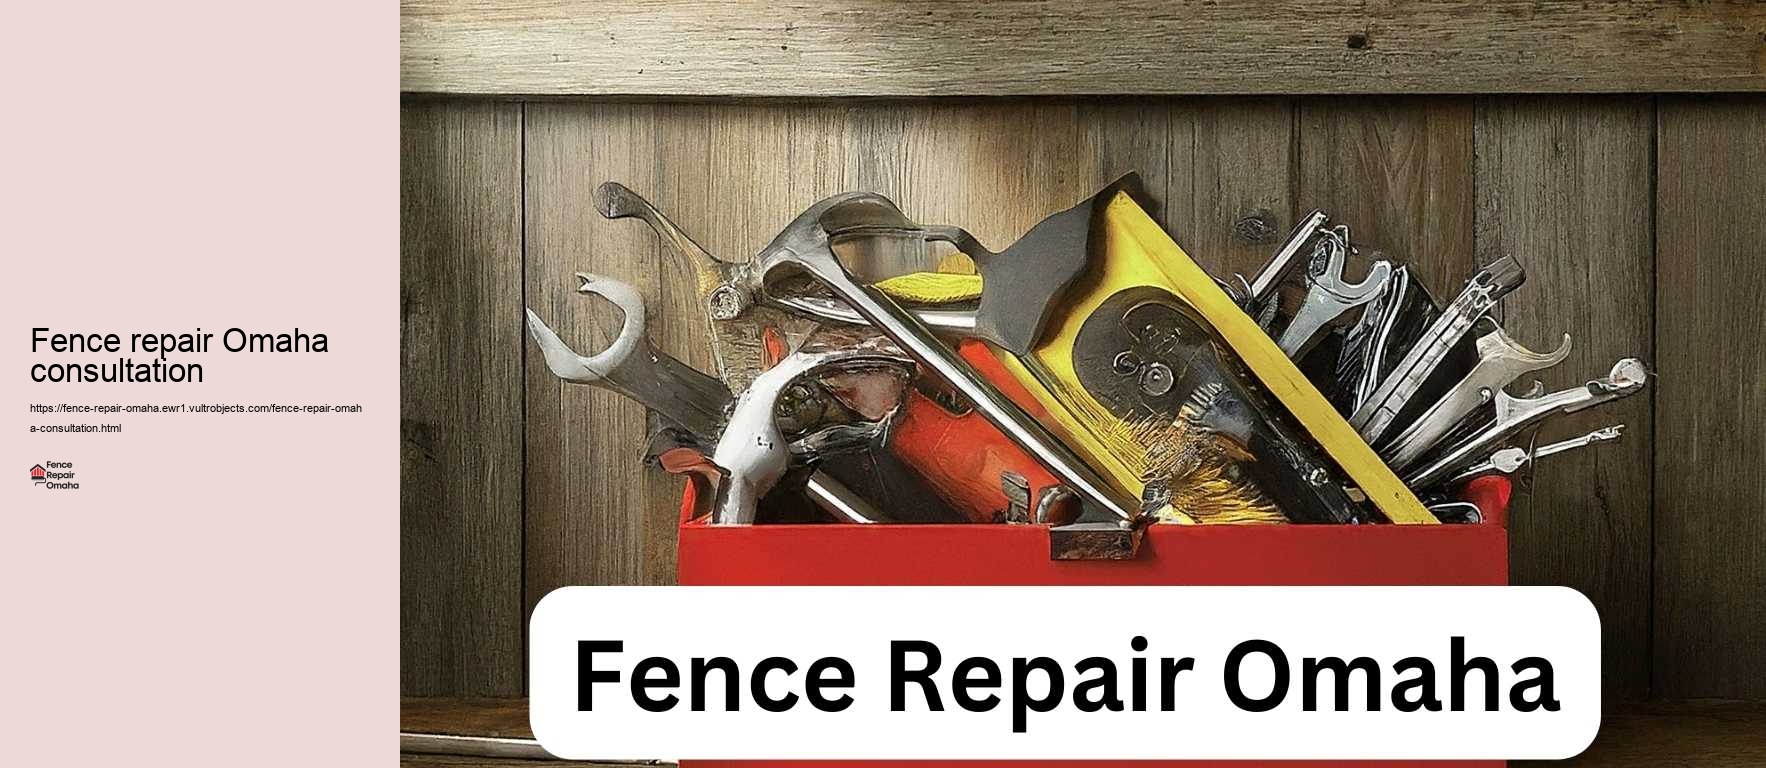 Fence repair Omaha consultation